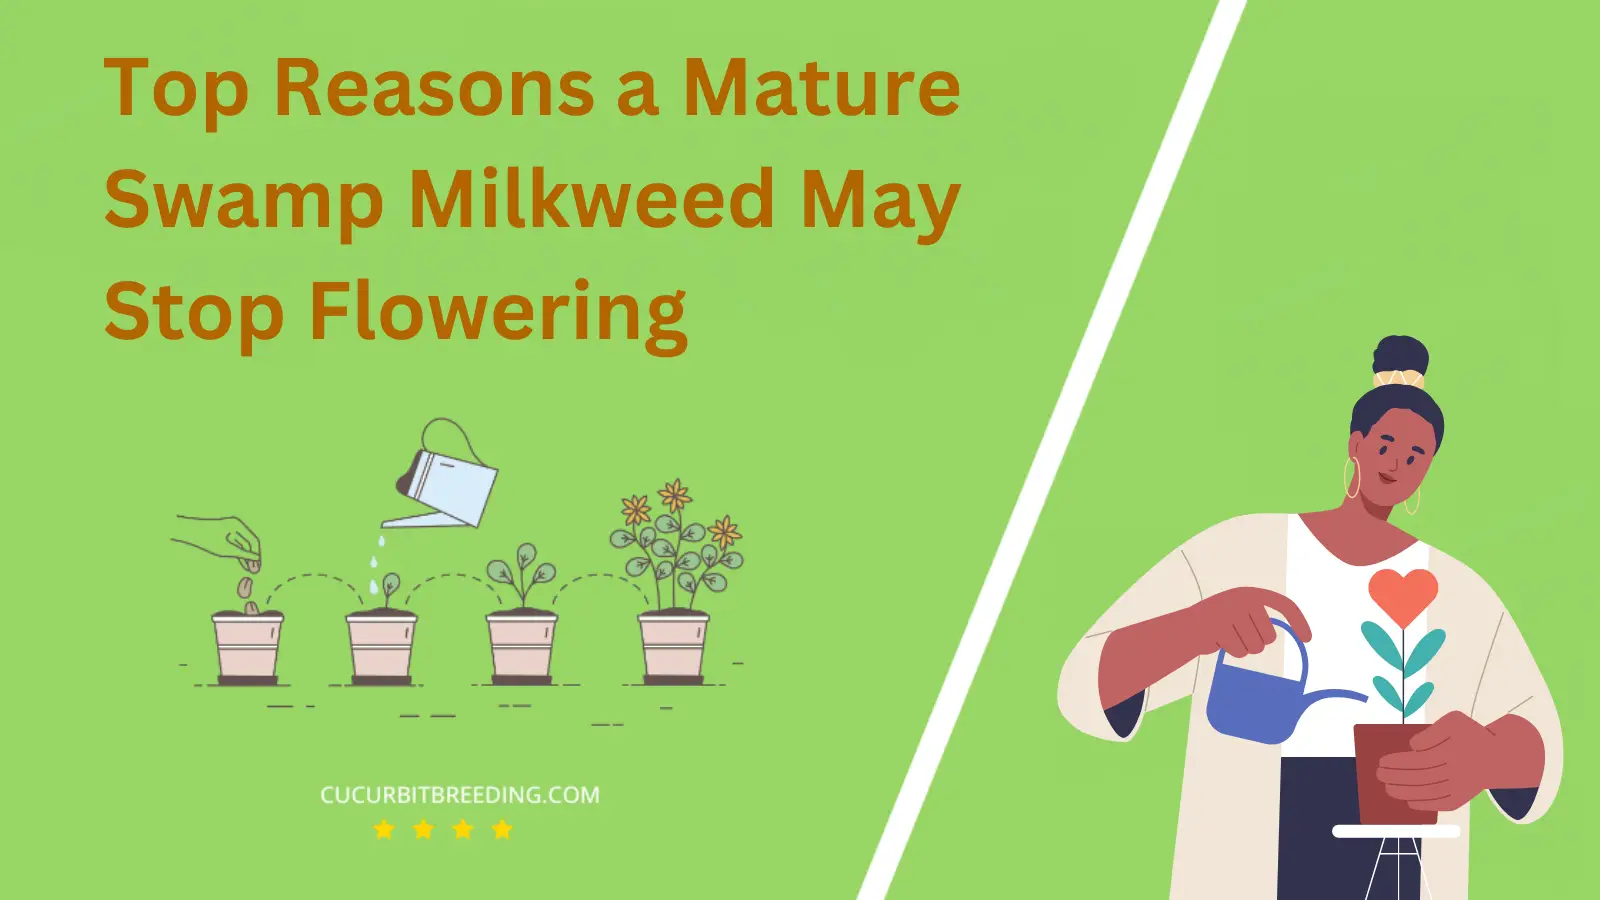 Top Reasons a Mature Swamp Milkweed May Stop Flowering